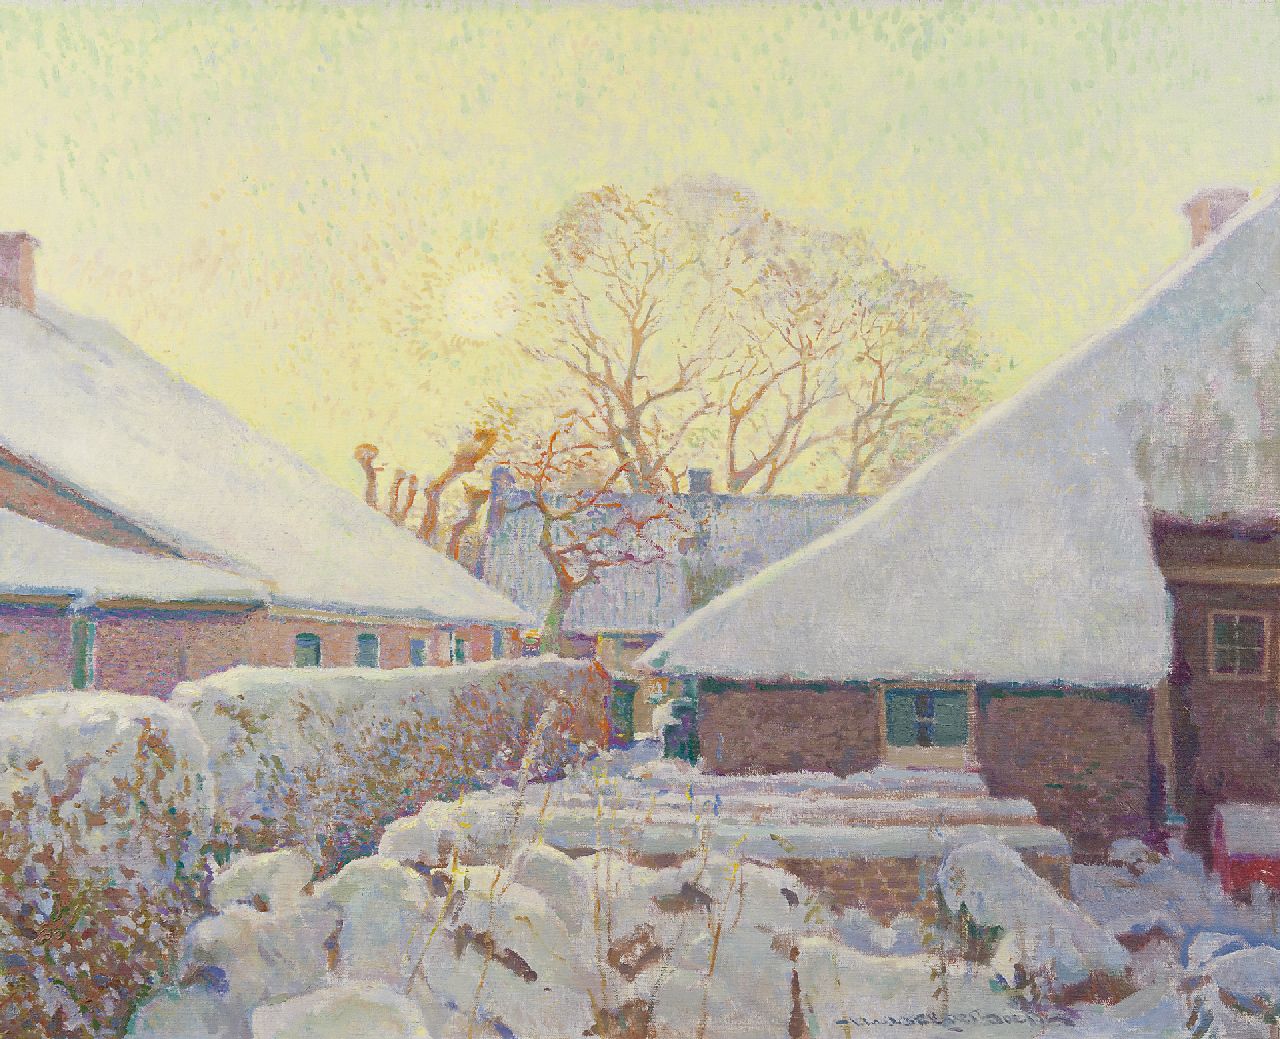 Boer H. de | Hessel de Boer, Snow-covered farms in Blaricum, oil on canvas 60.2 x 74.0 cm, signed c.r.